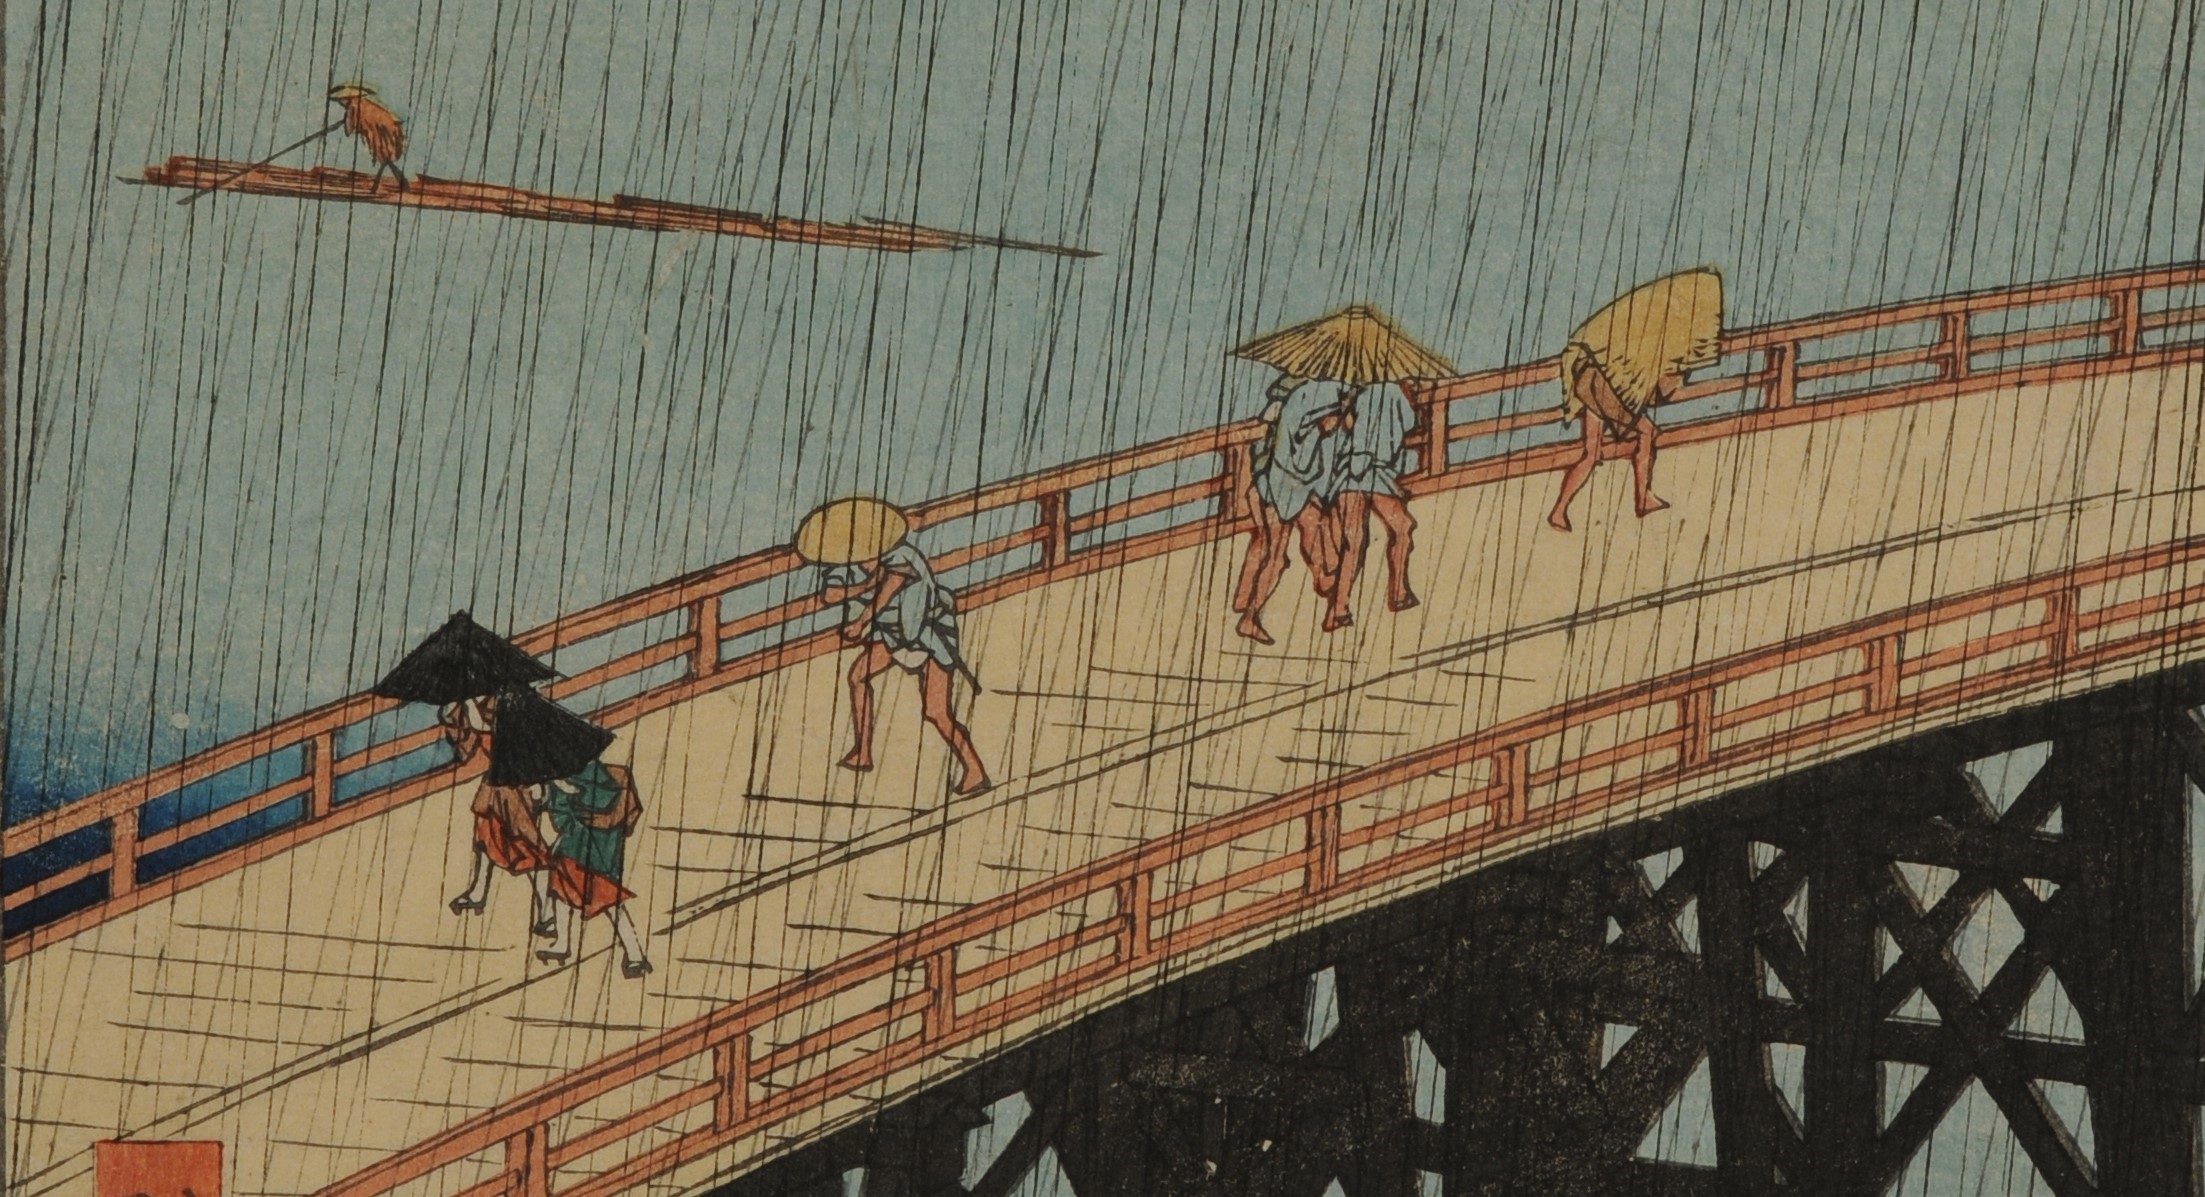 Print of people on a bridge in a rainstorm